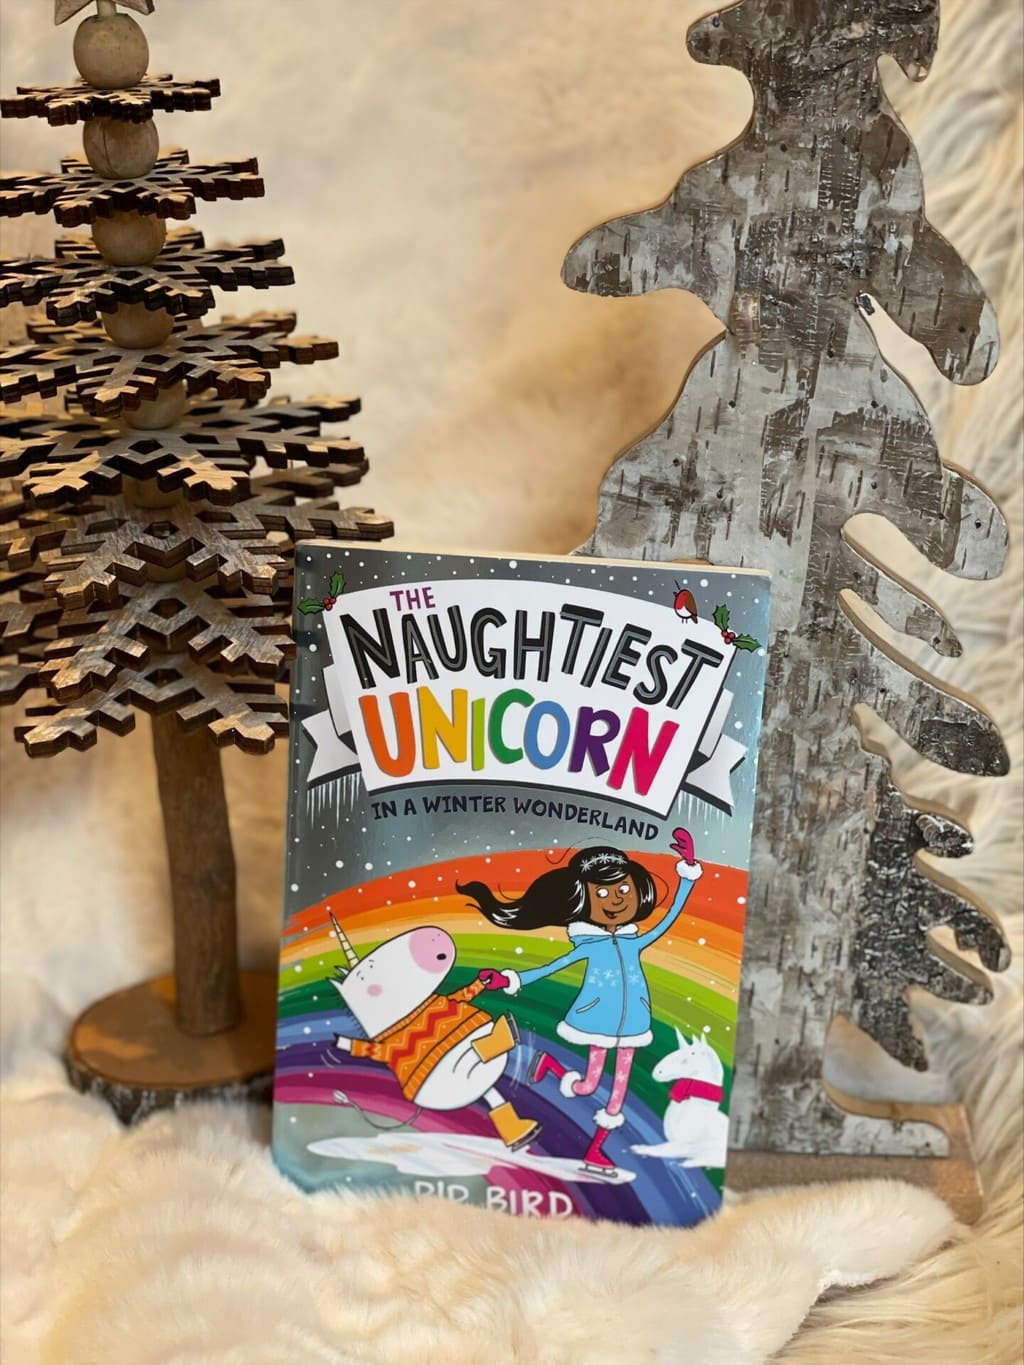 he Naughtiest Unicorn in a Winter Wonderland – Pip Bird (author), David O’Connell (illustrator), Farshore (Publisher)